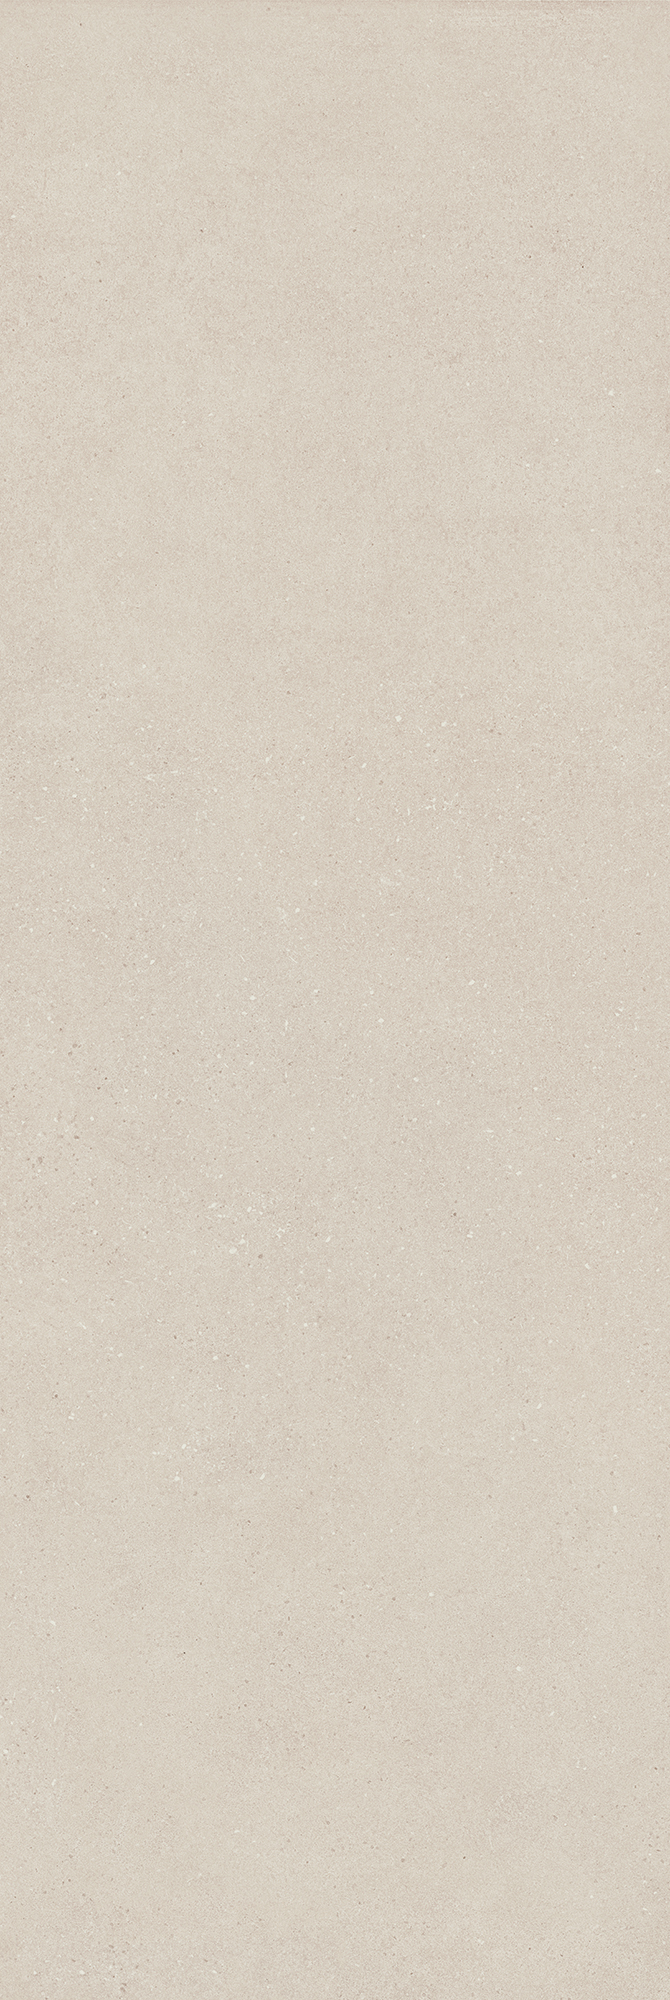 14045R Настенная Монсеррат Бежевая Светлая Матовая Обрезная - фото 4